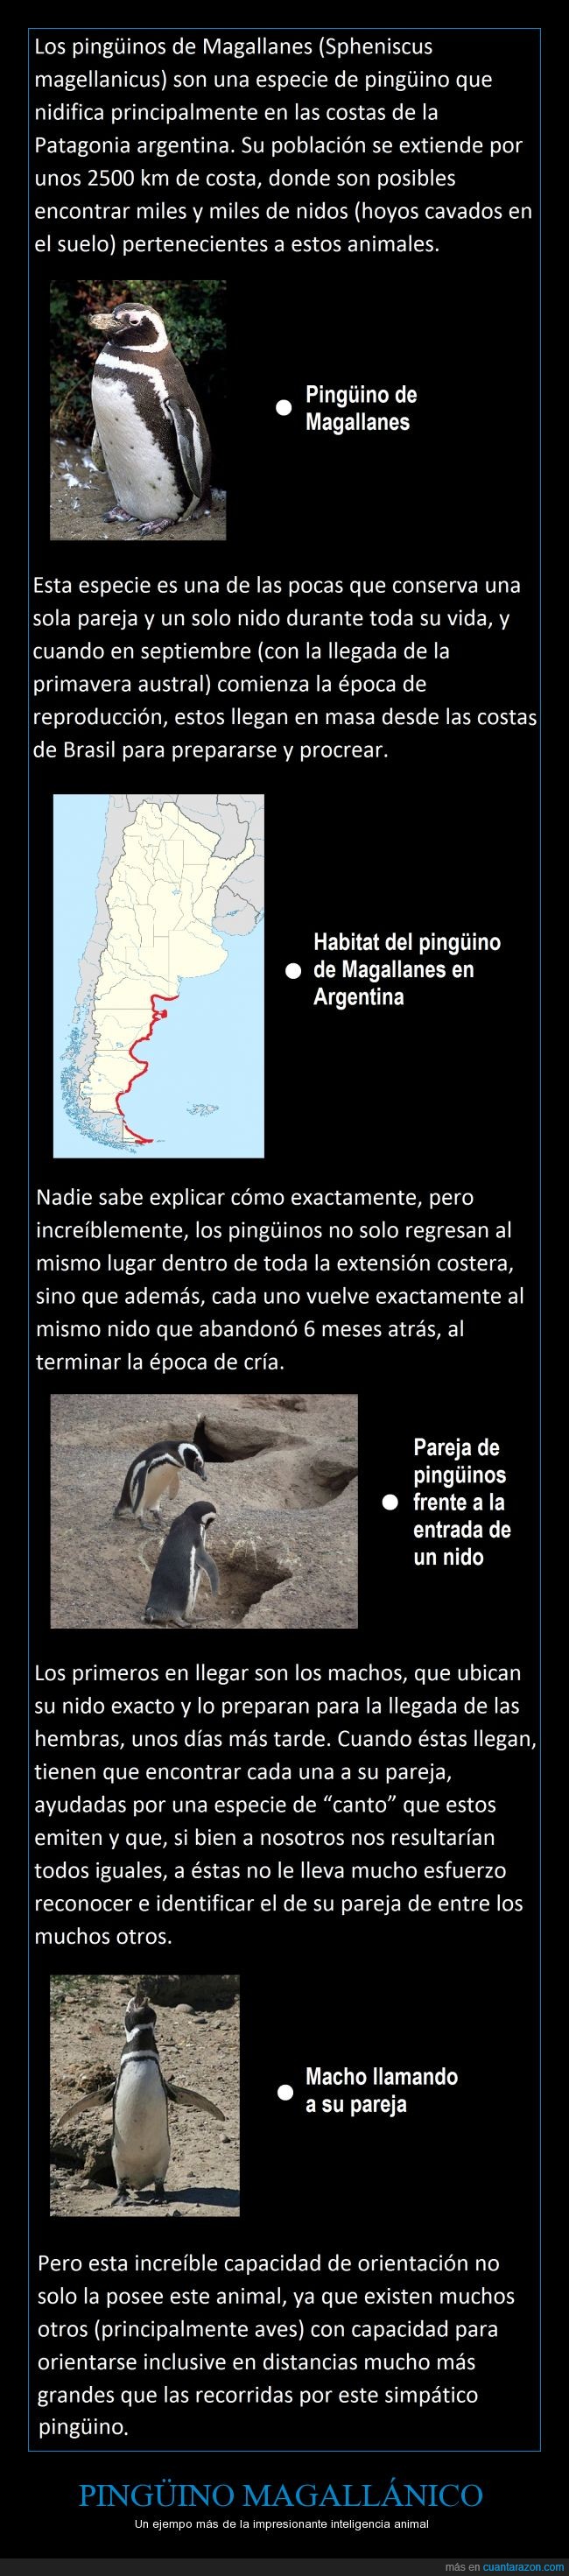 animal,Argentina,Brasil,distancia,encontrar,Magallanes,magallánico,nido,pareja,Patagonia,Pingüino